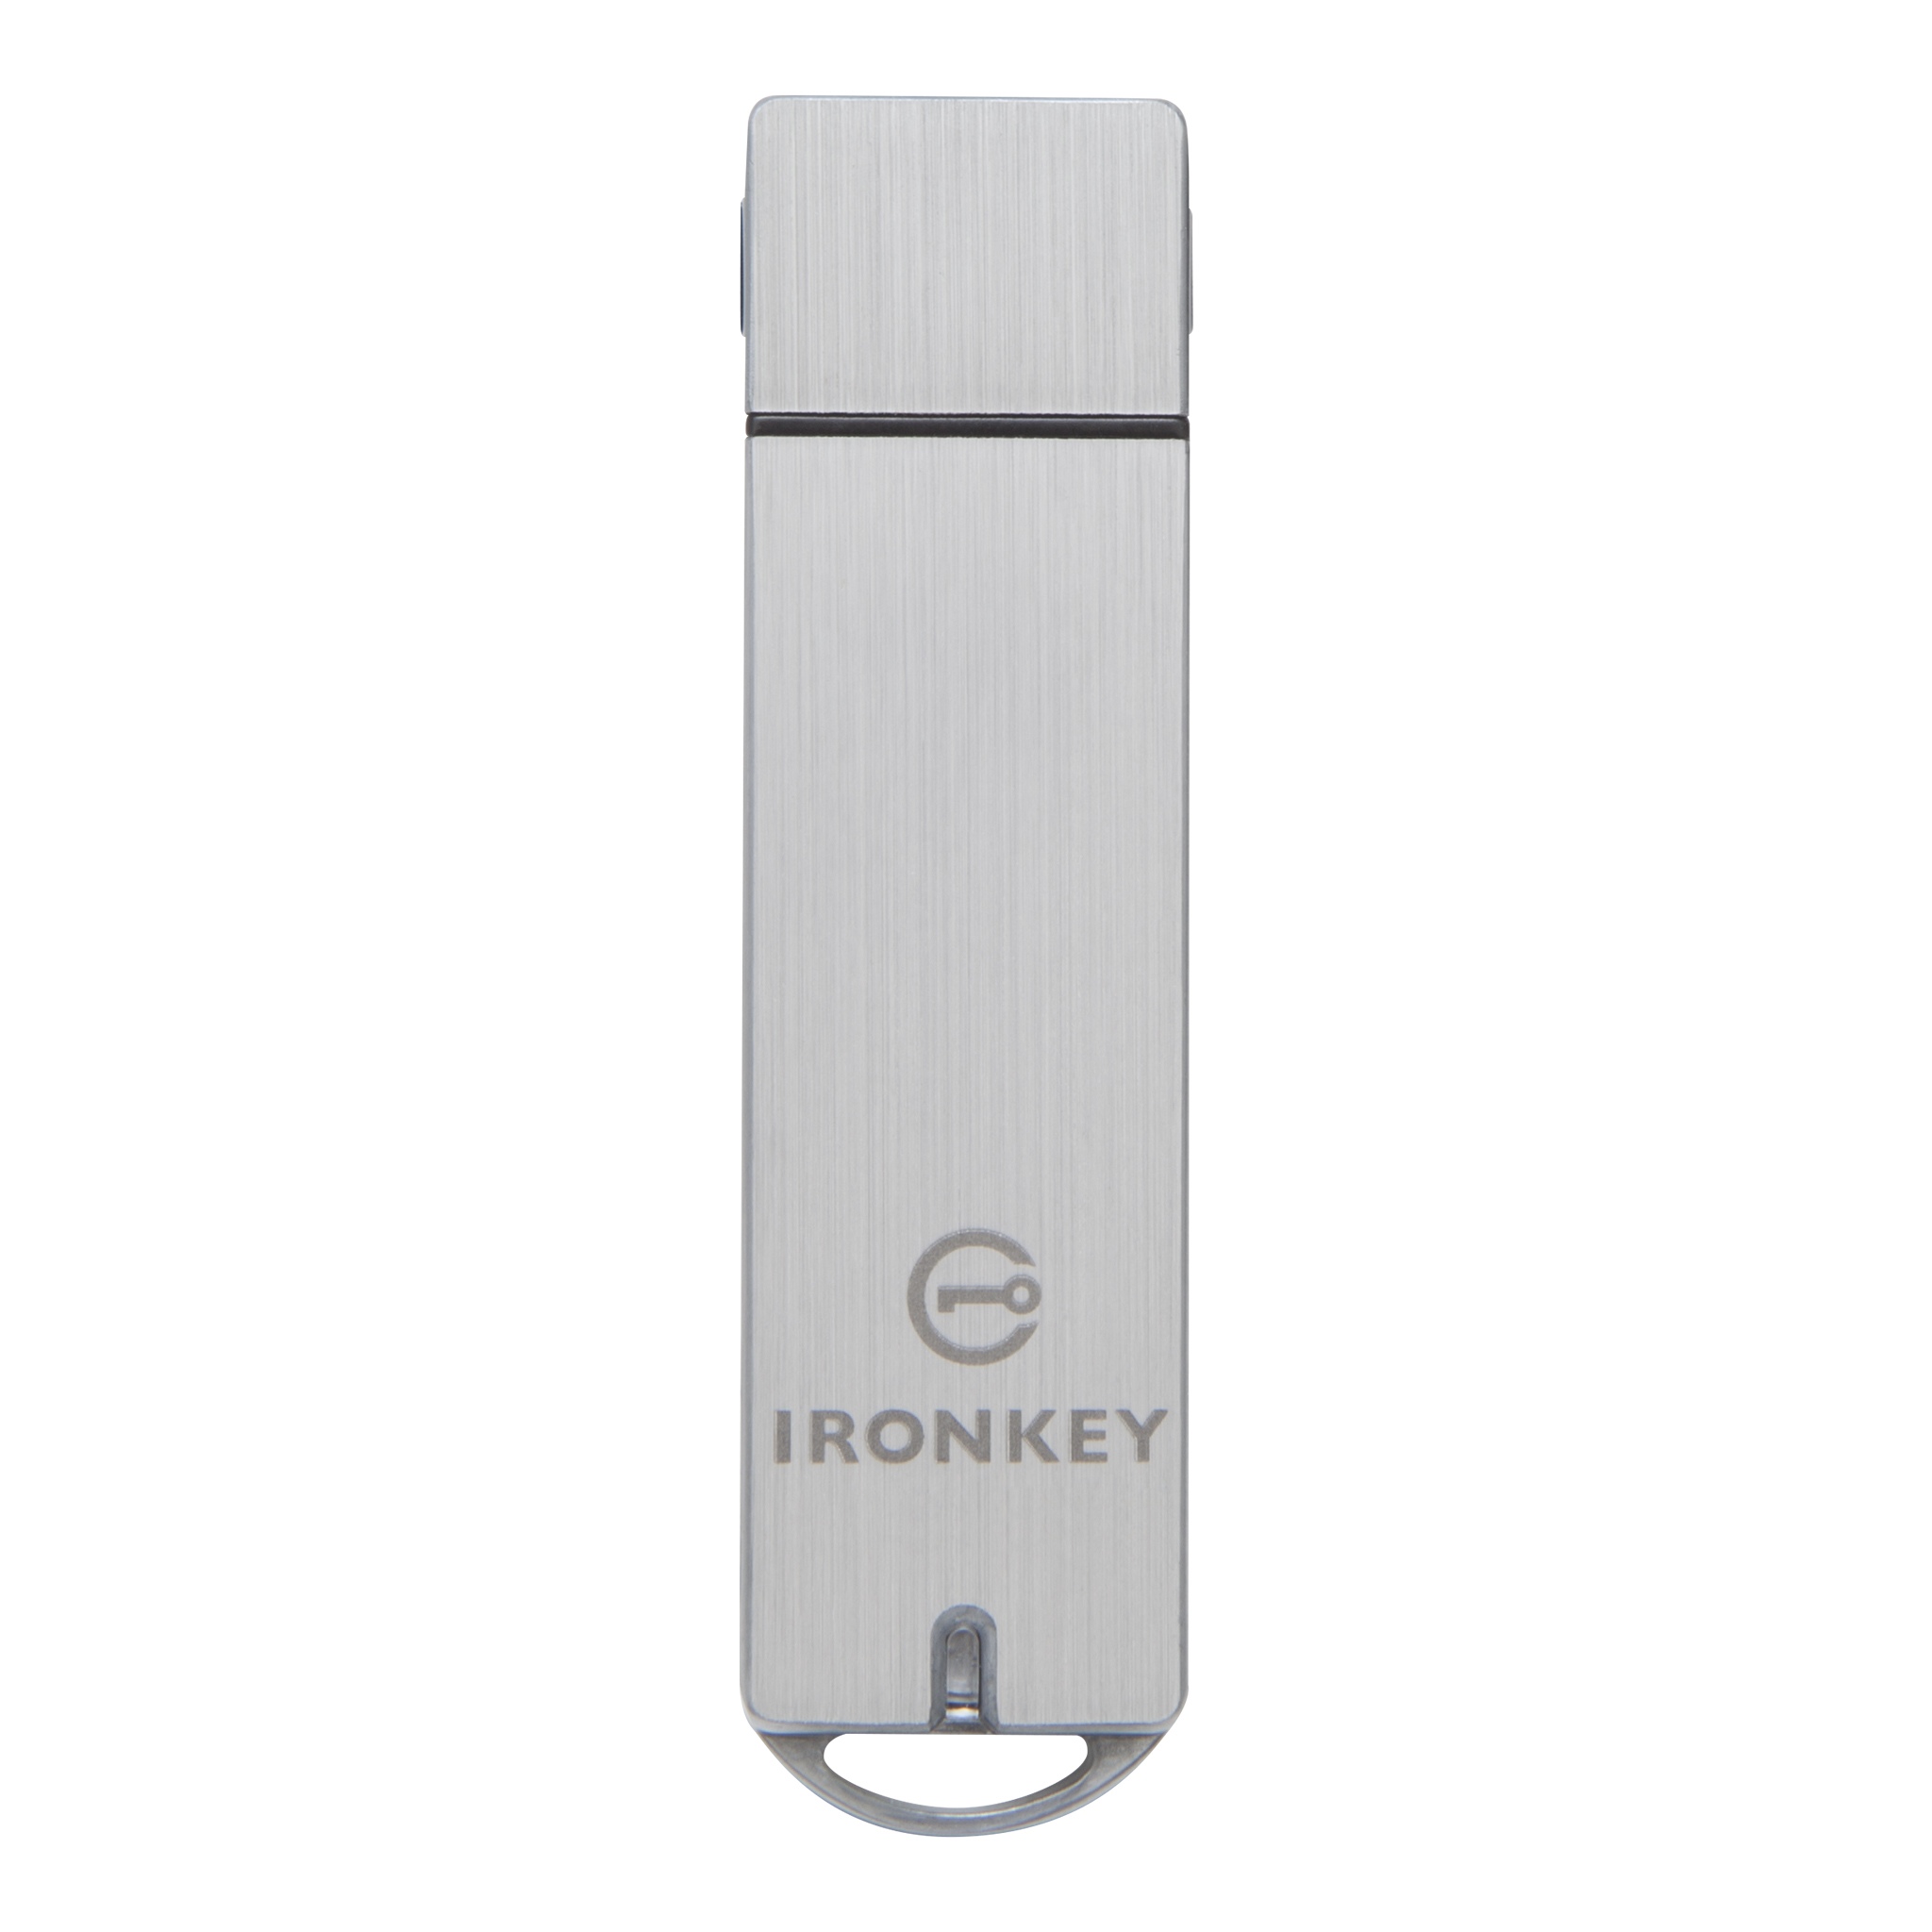 Kingston IronKey Locker+ 50 Encrypted USB Flash Drive